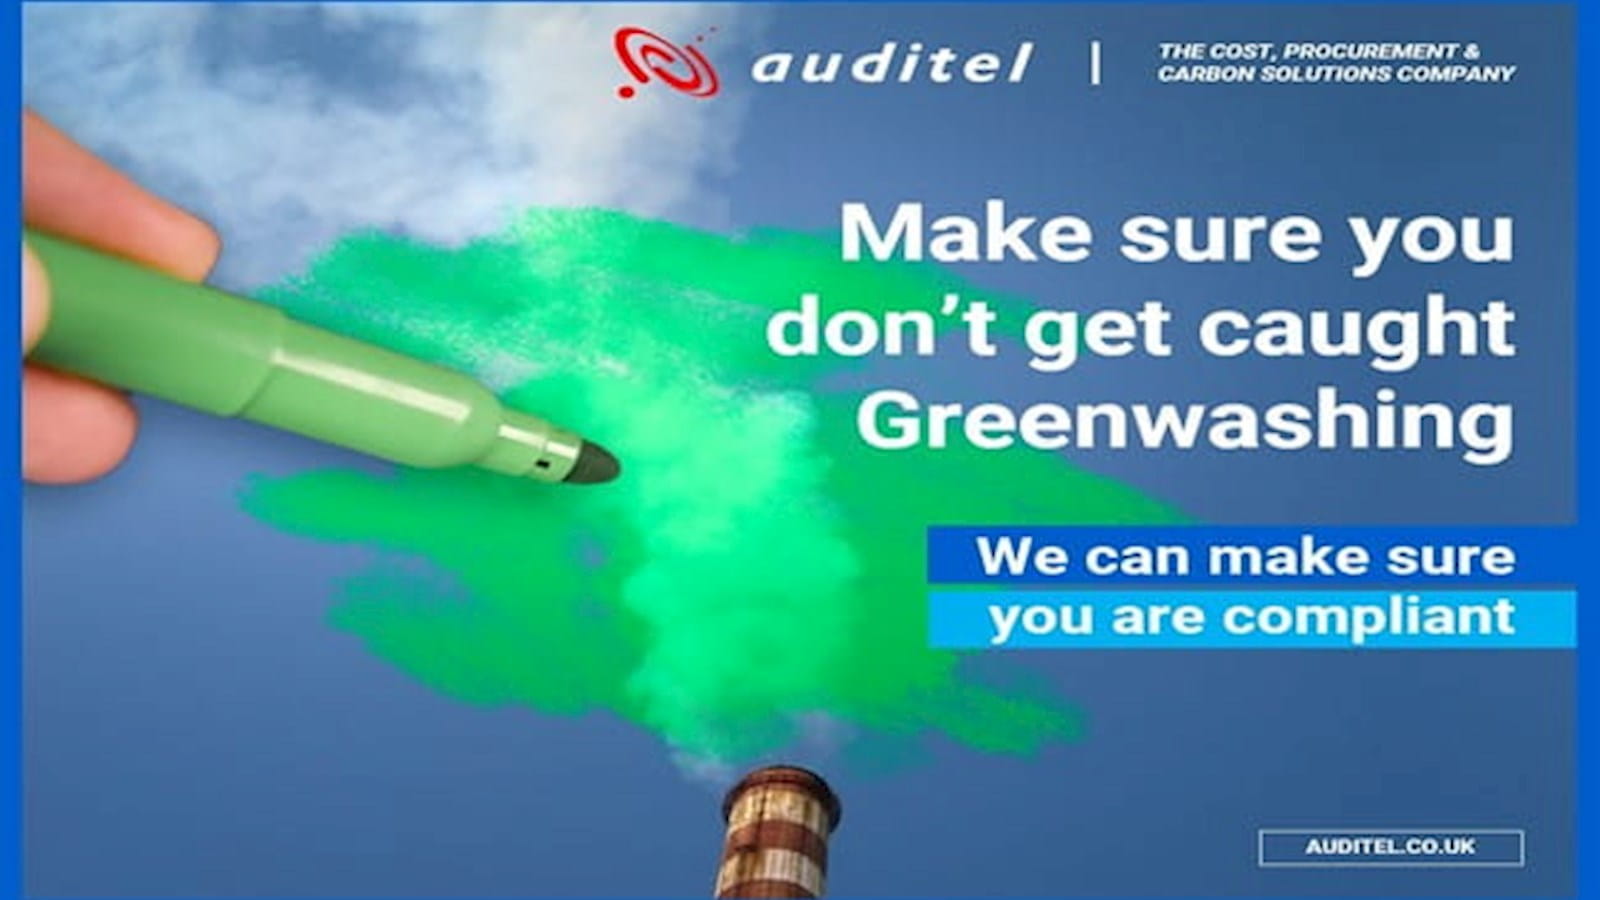 Greenwashing from Auditel